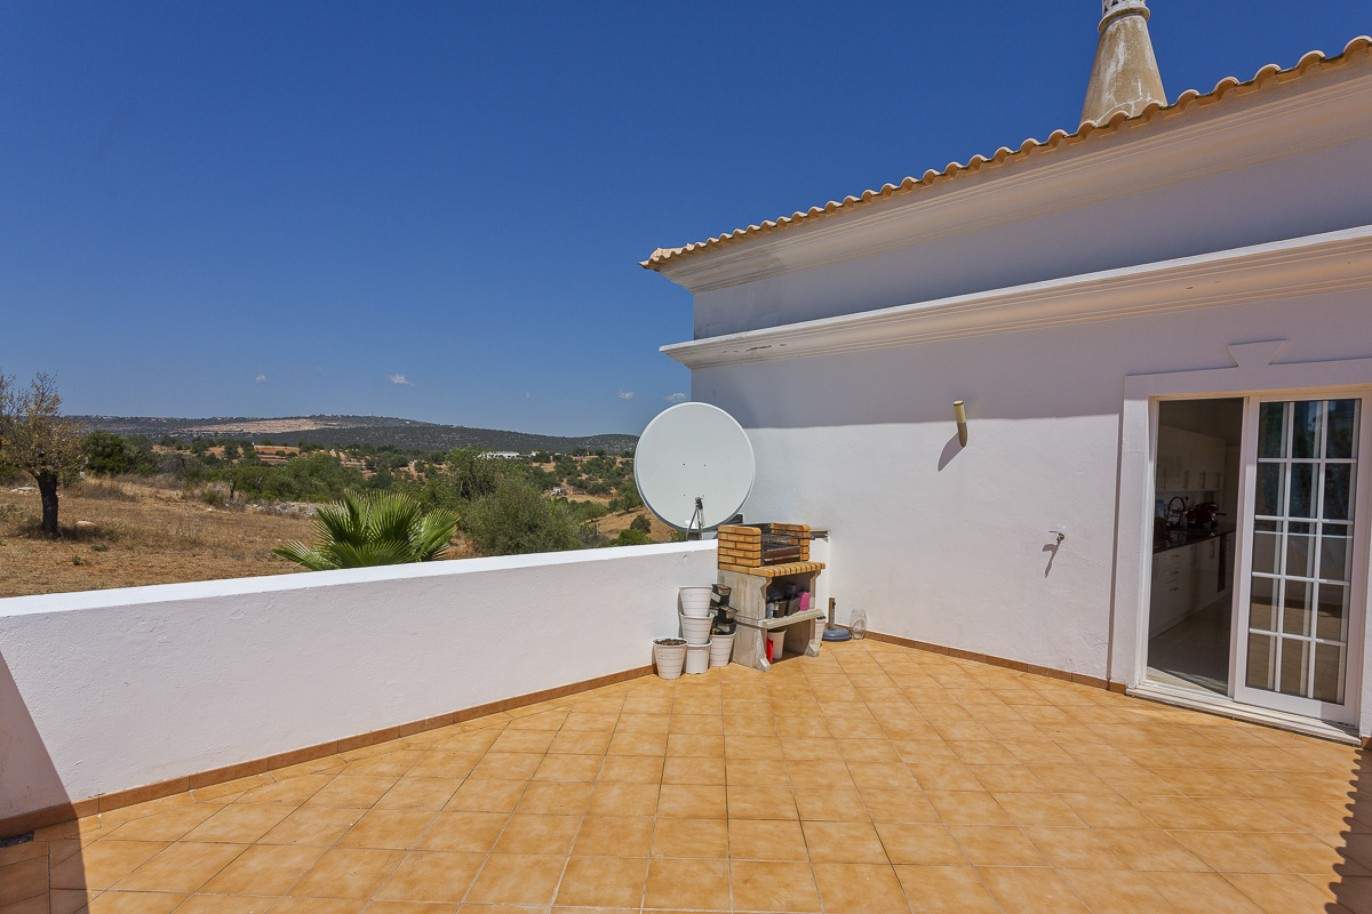 4 Bedroom Villa with sea view, for sale in Boliqueime, Algarve_209951